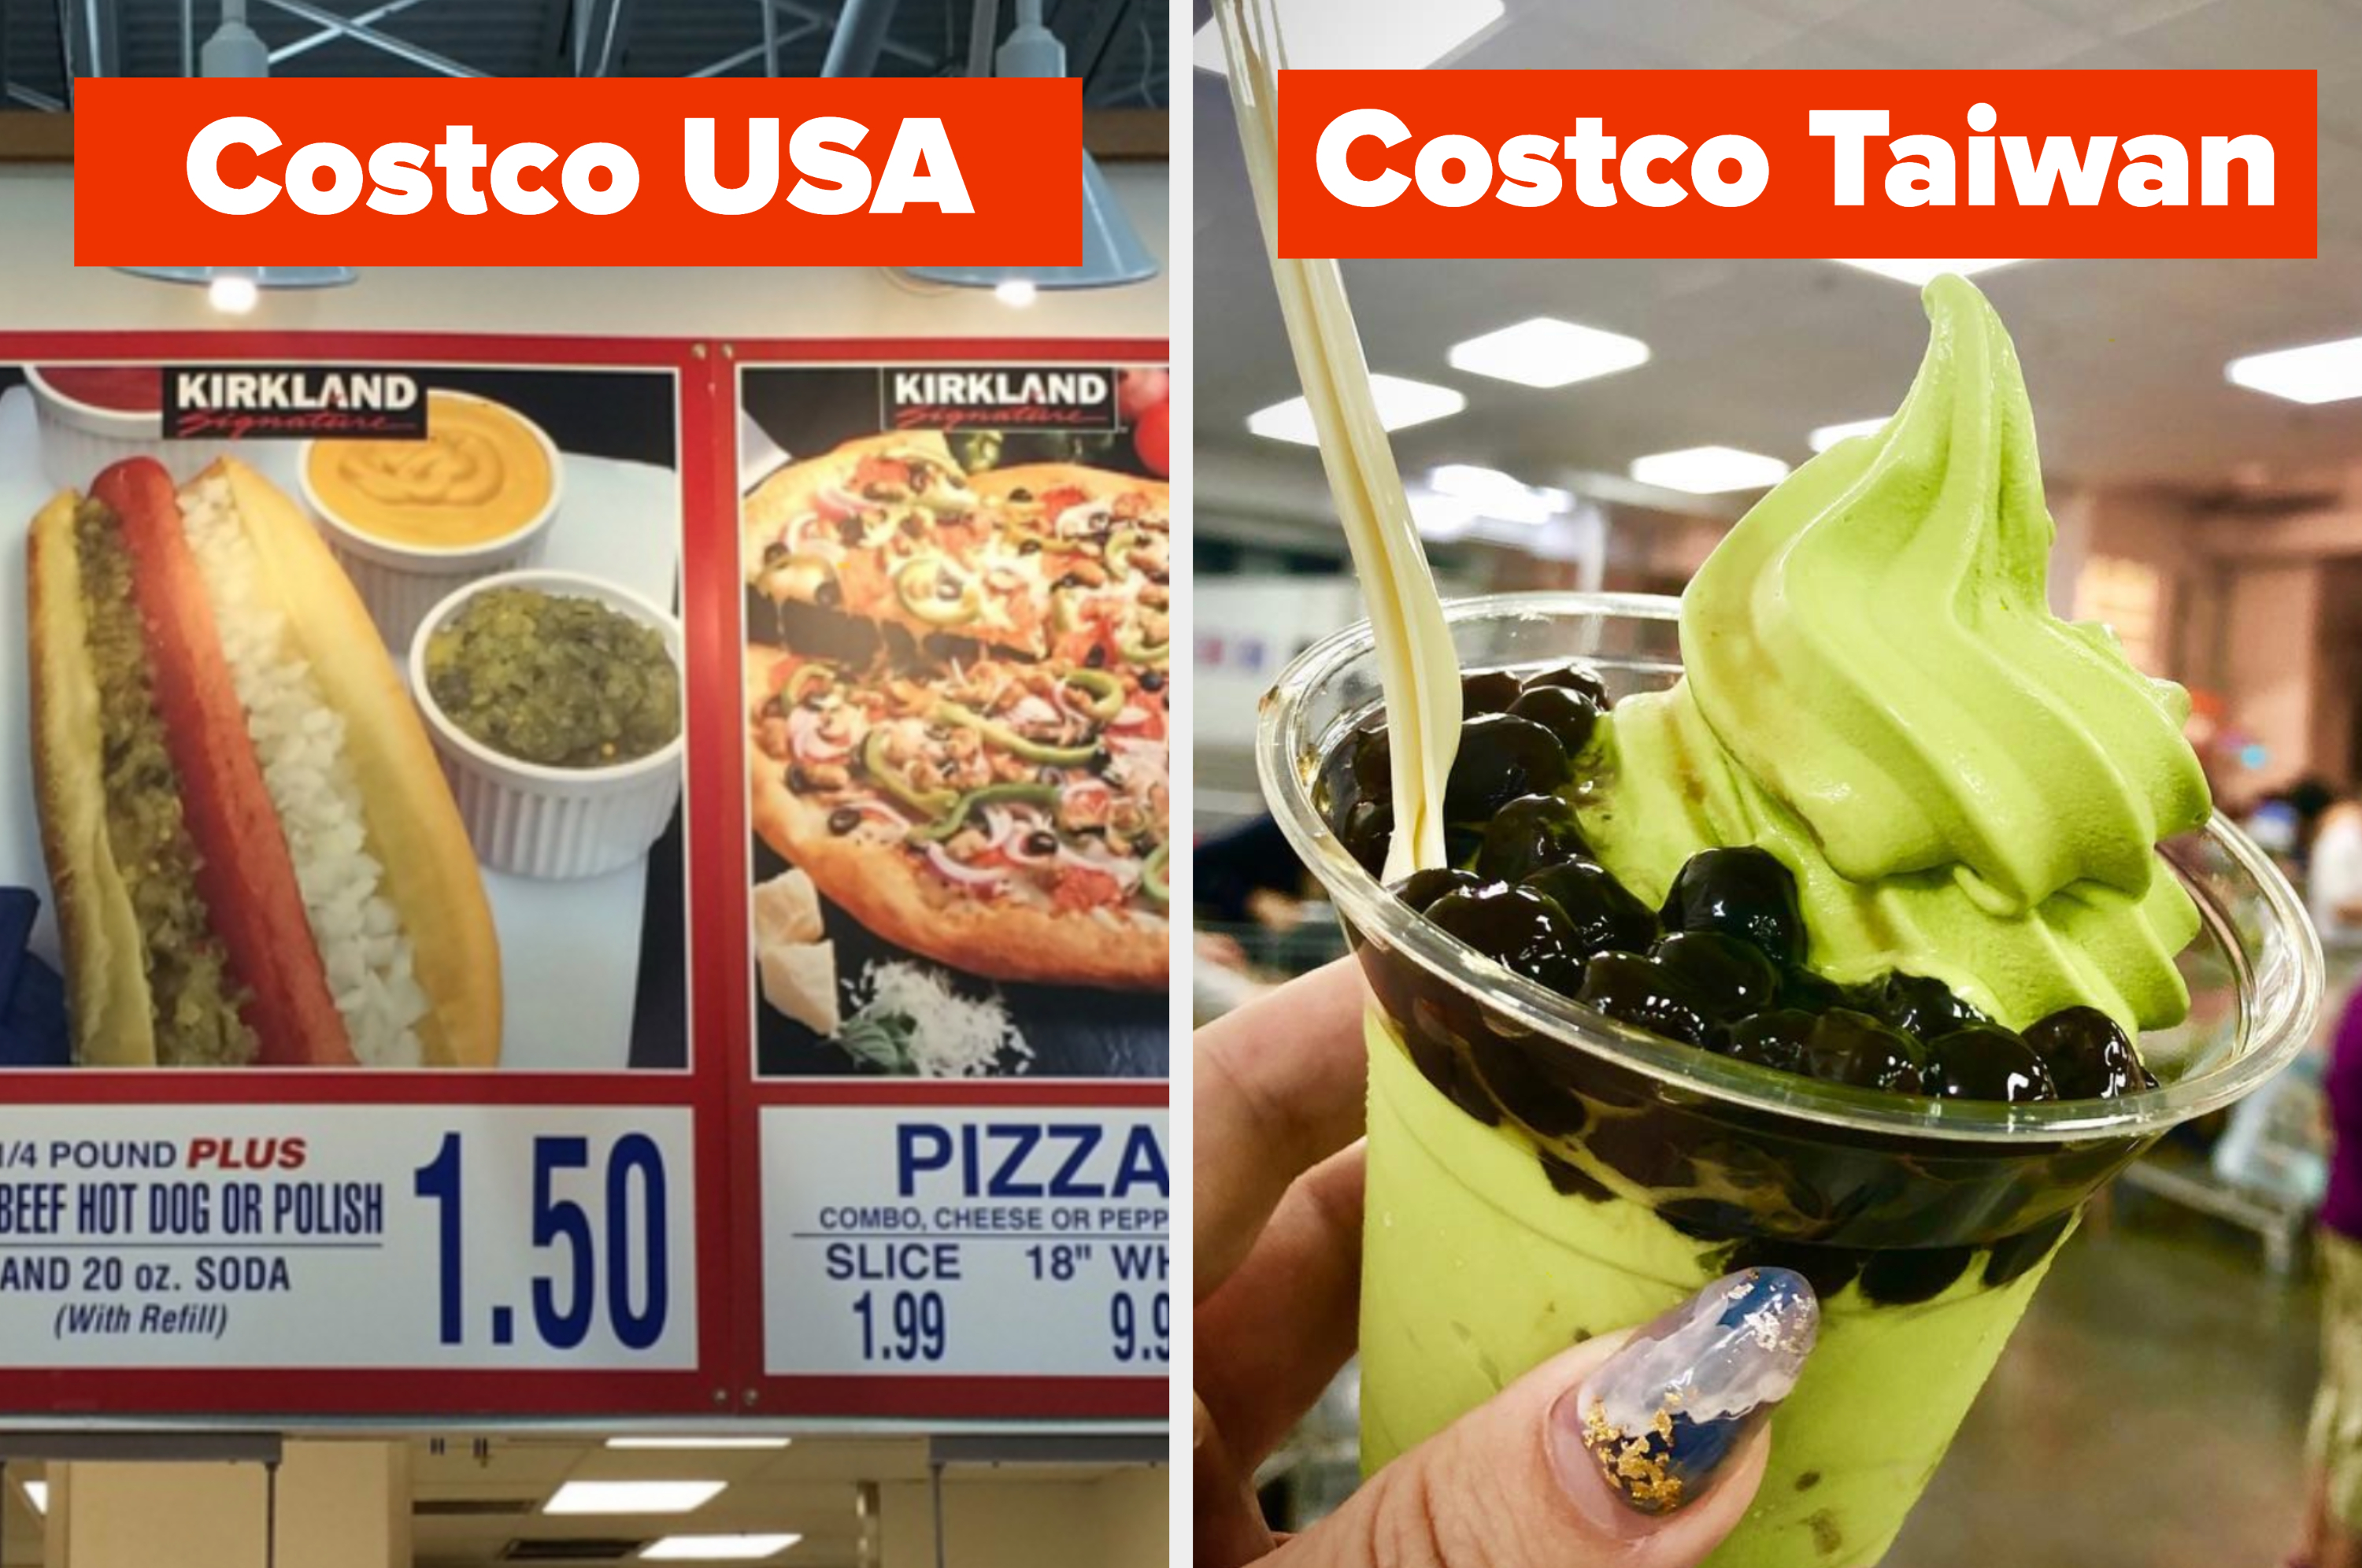 Costco Food Court Menus Around The World: USA, France, Japan